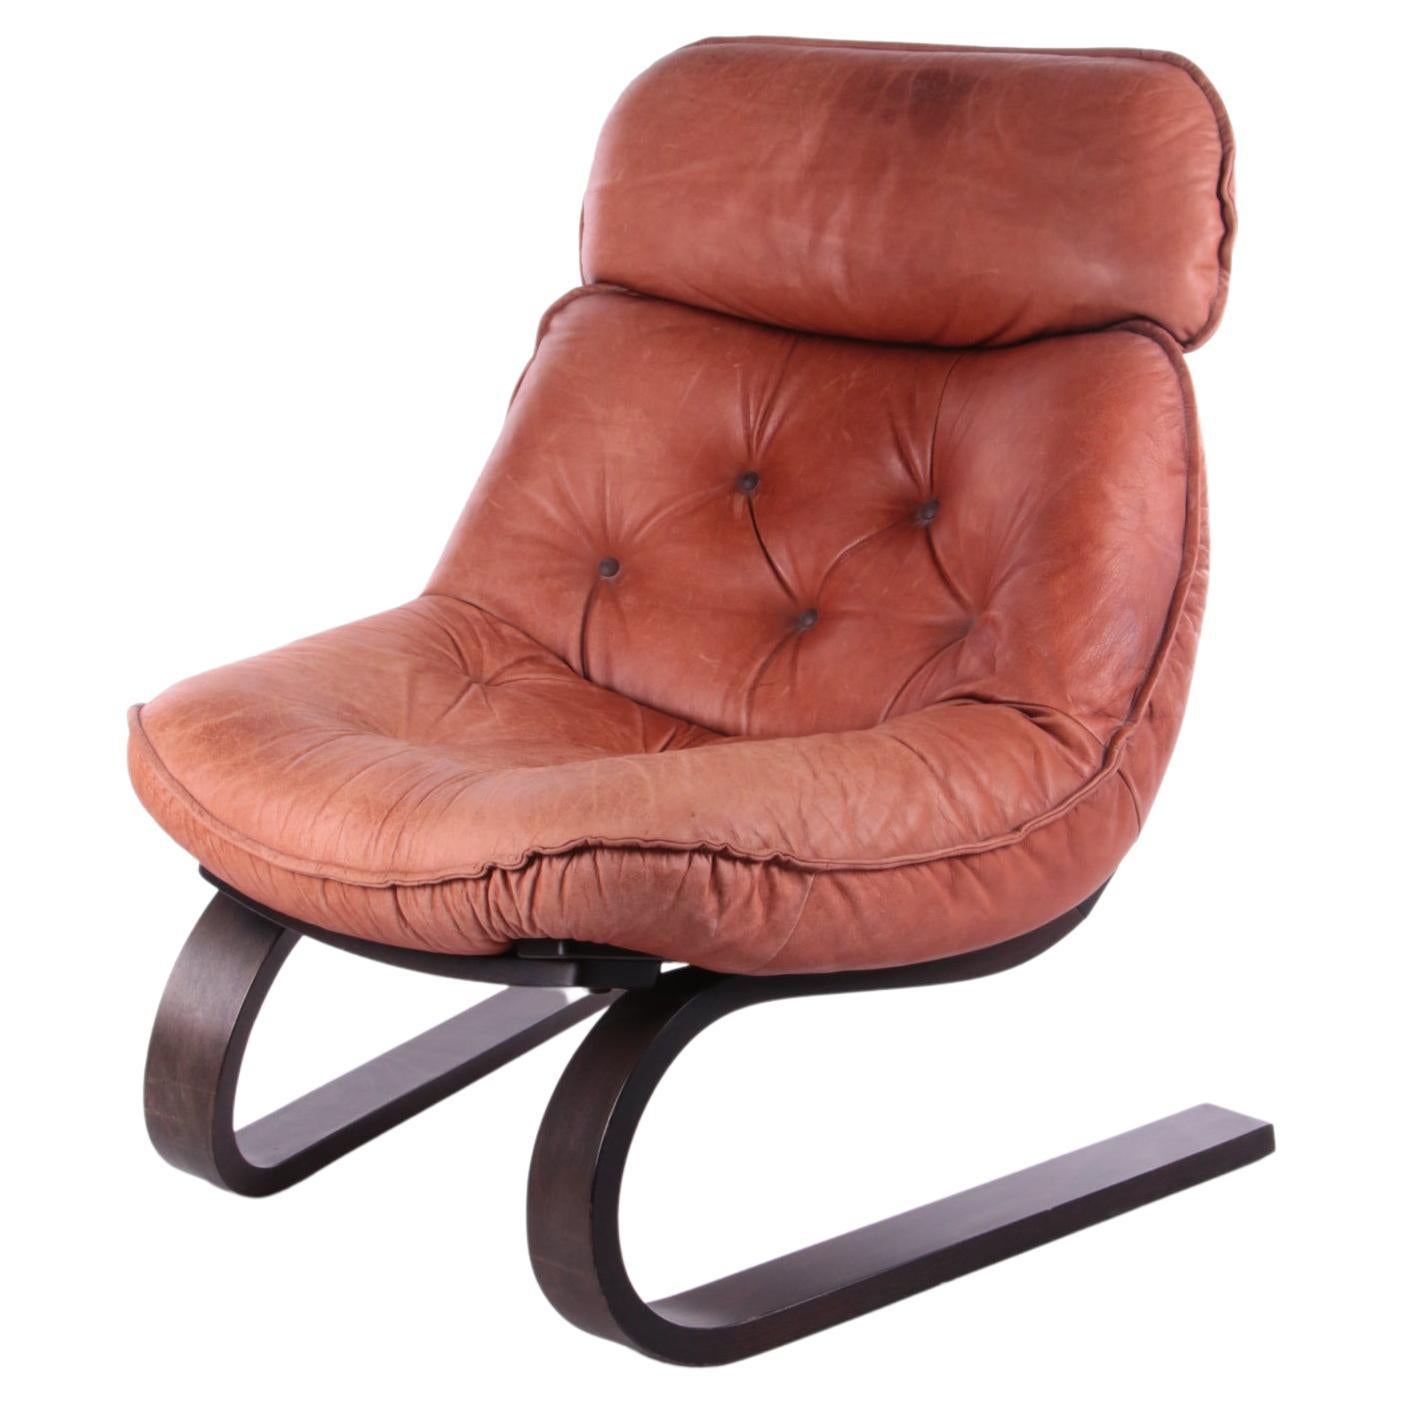 Vintage Brazilian Armchair with Cognac Color Leather Seat Cushion, 70s For Sale